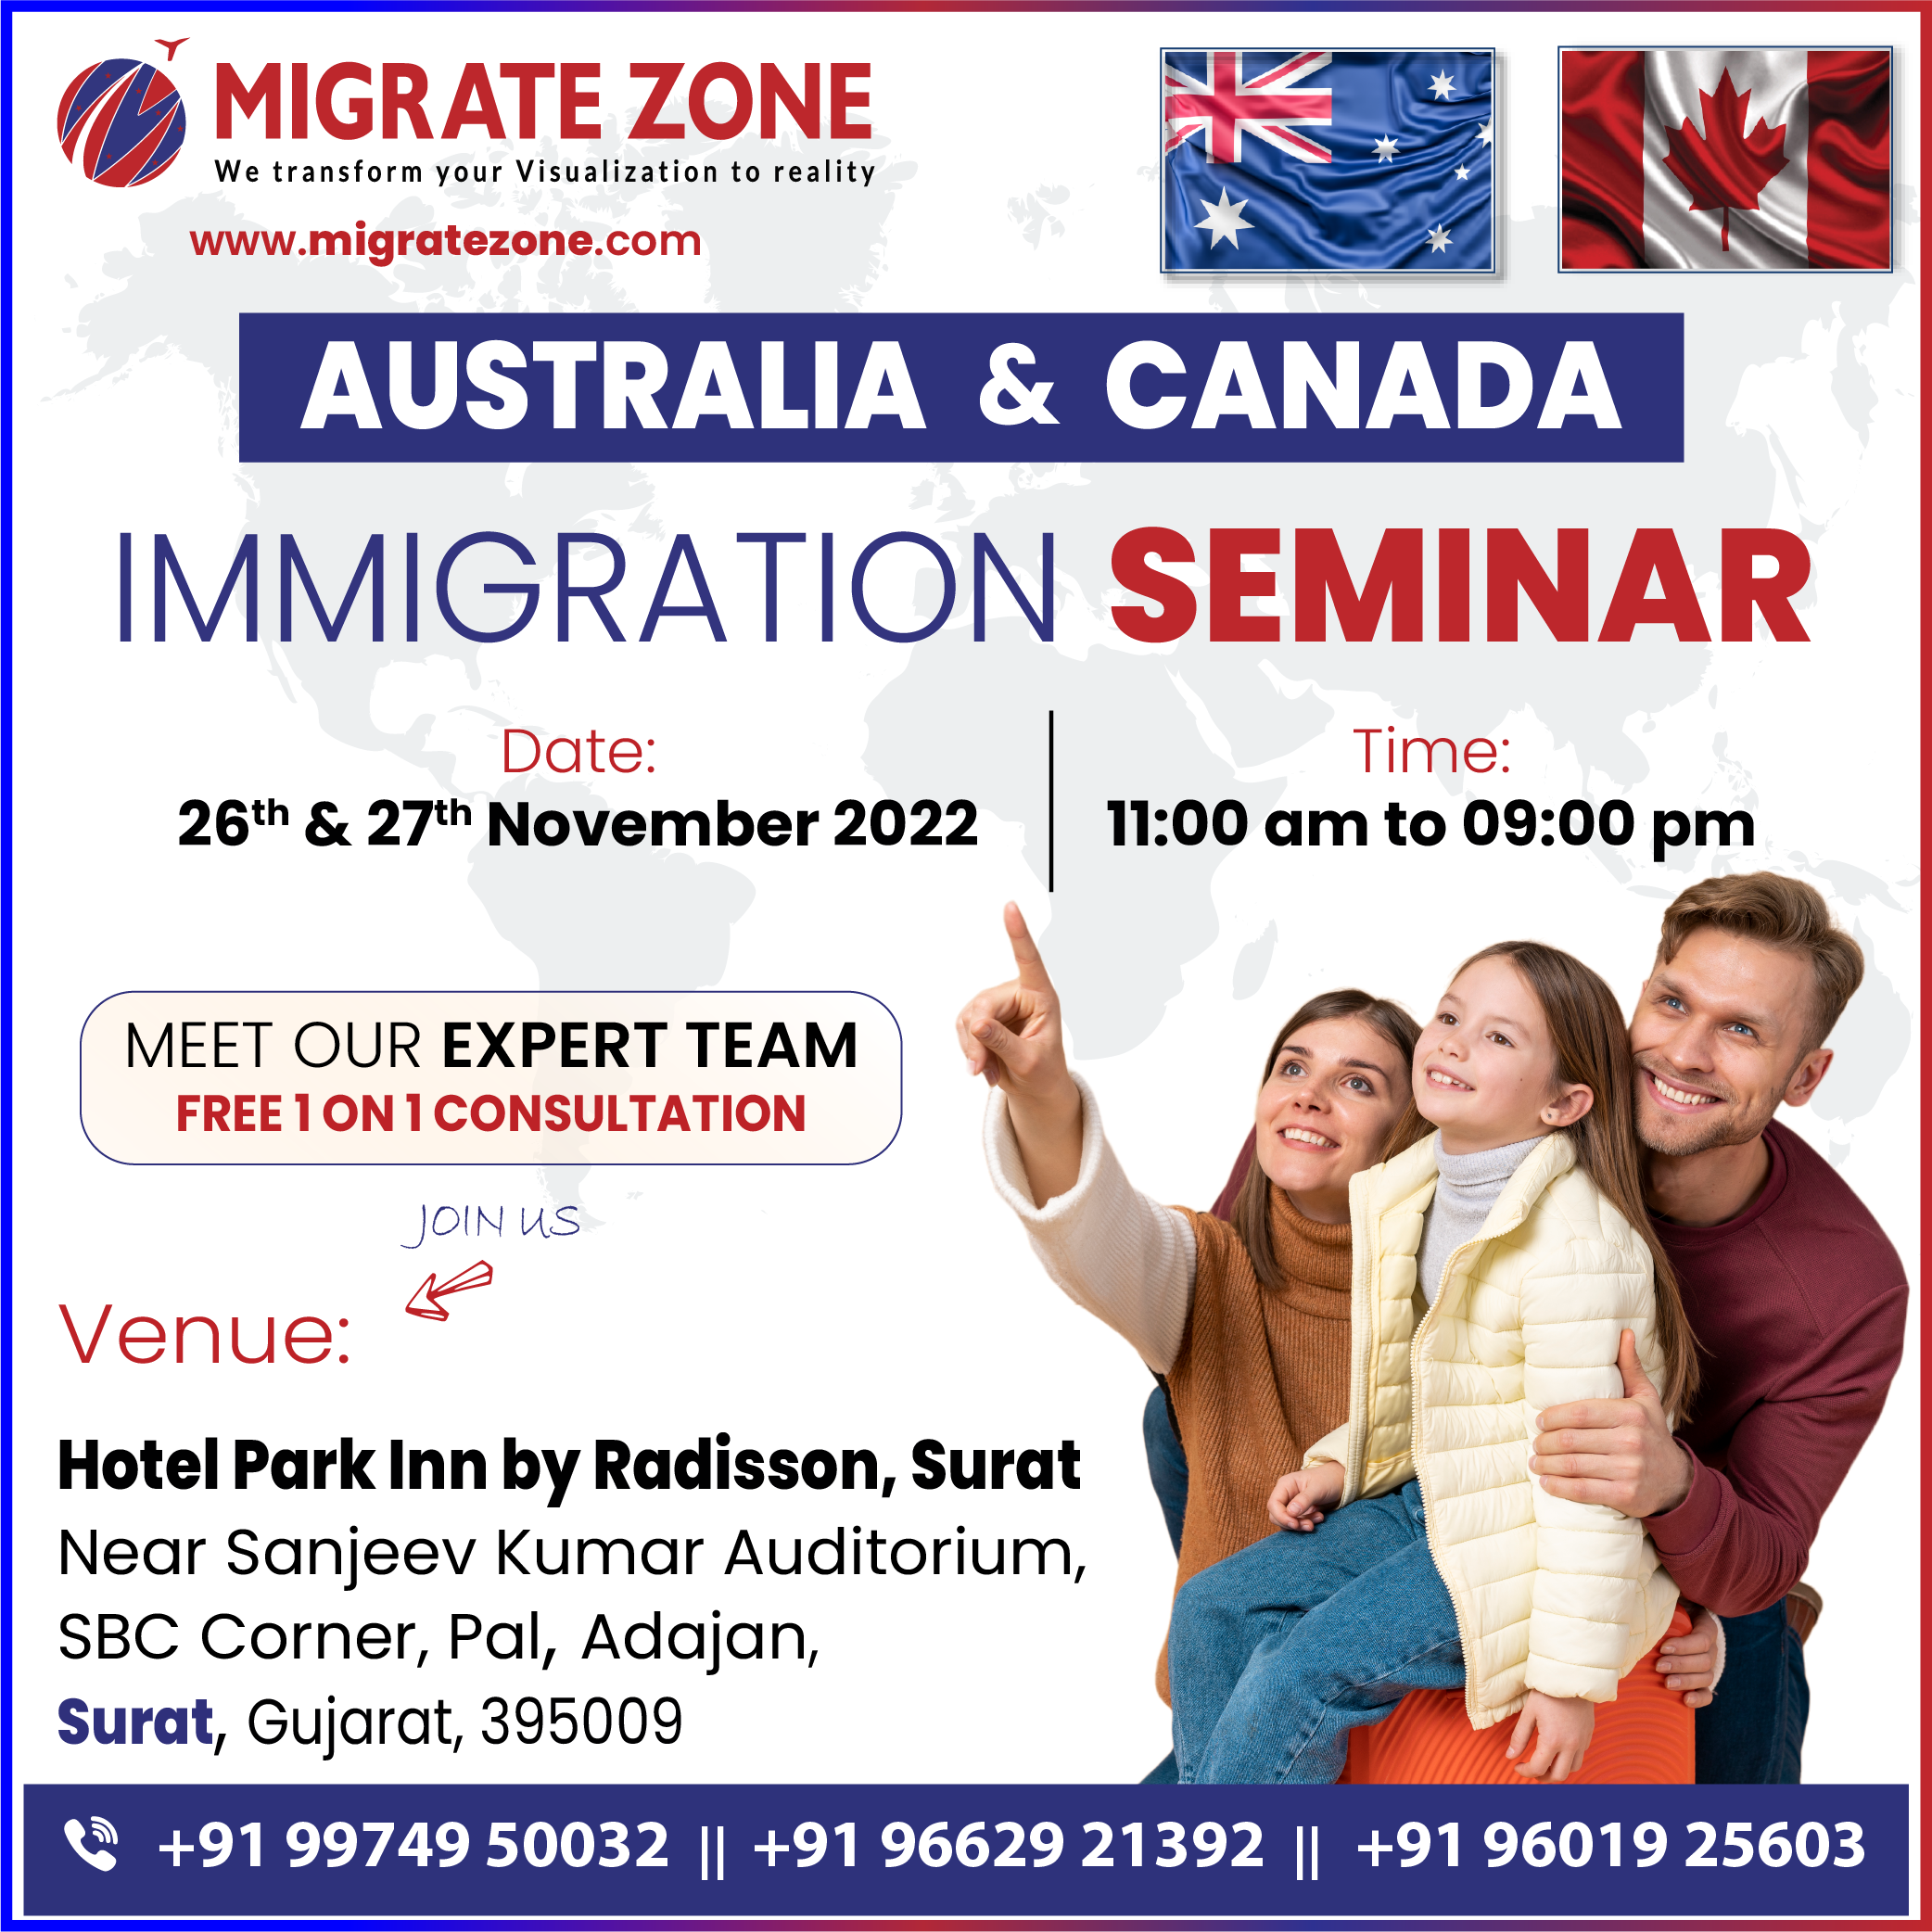 Australia and Canada immigration FREE SEMINAR, Surat, Gujarat, India